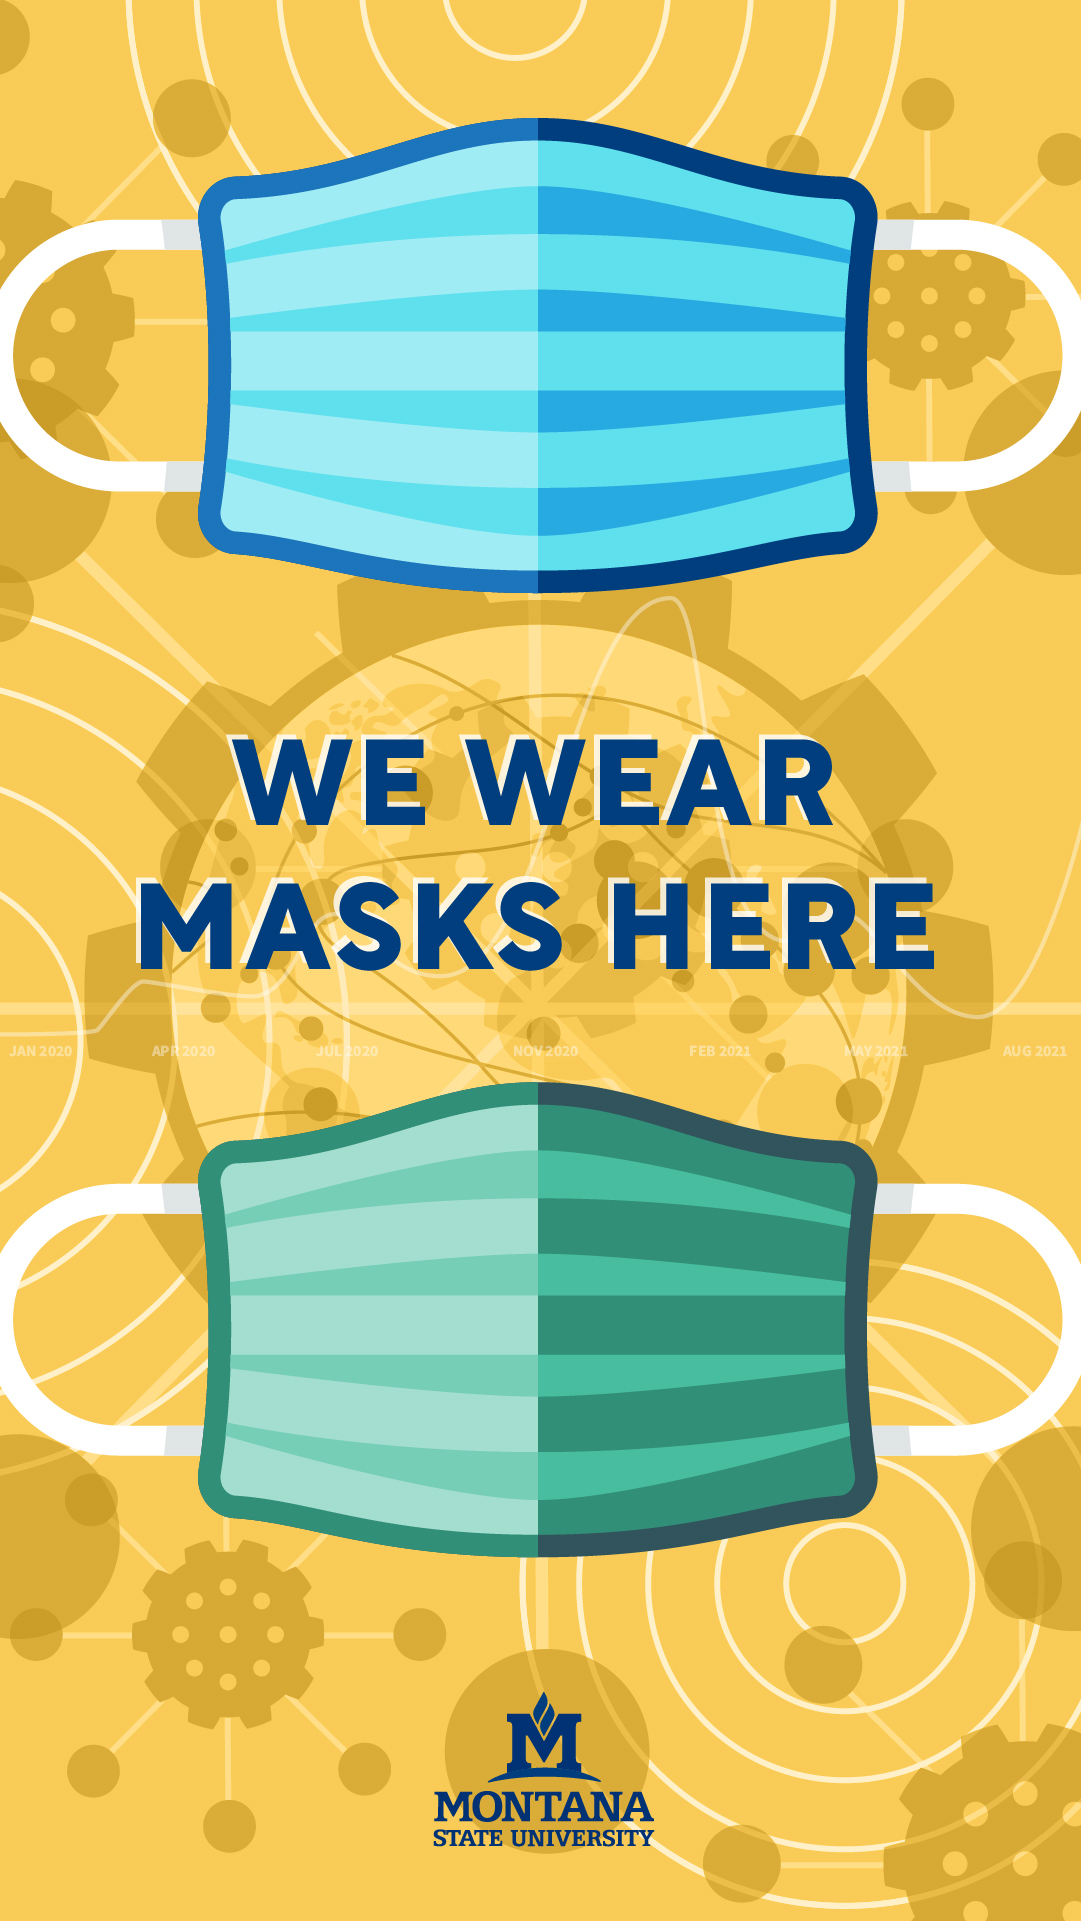 We wear masks here.